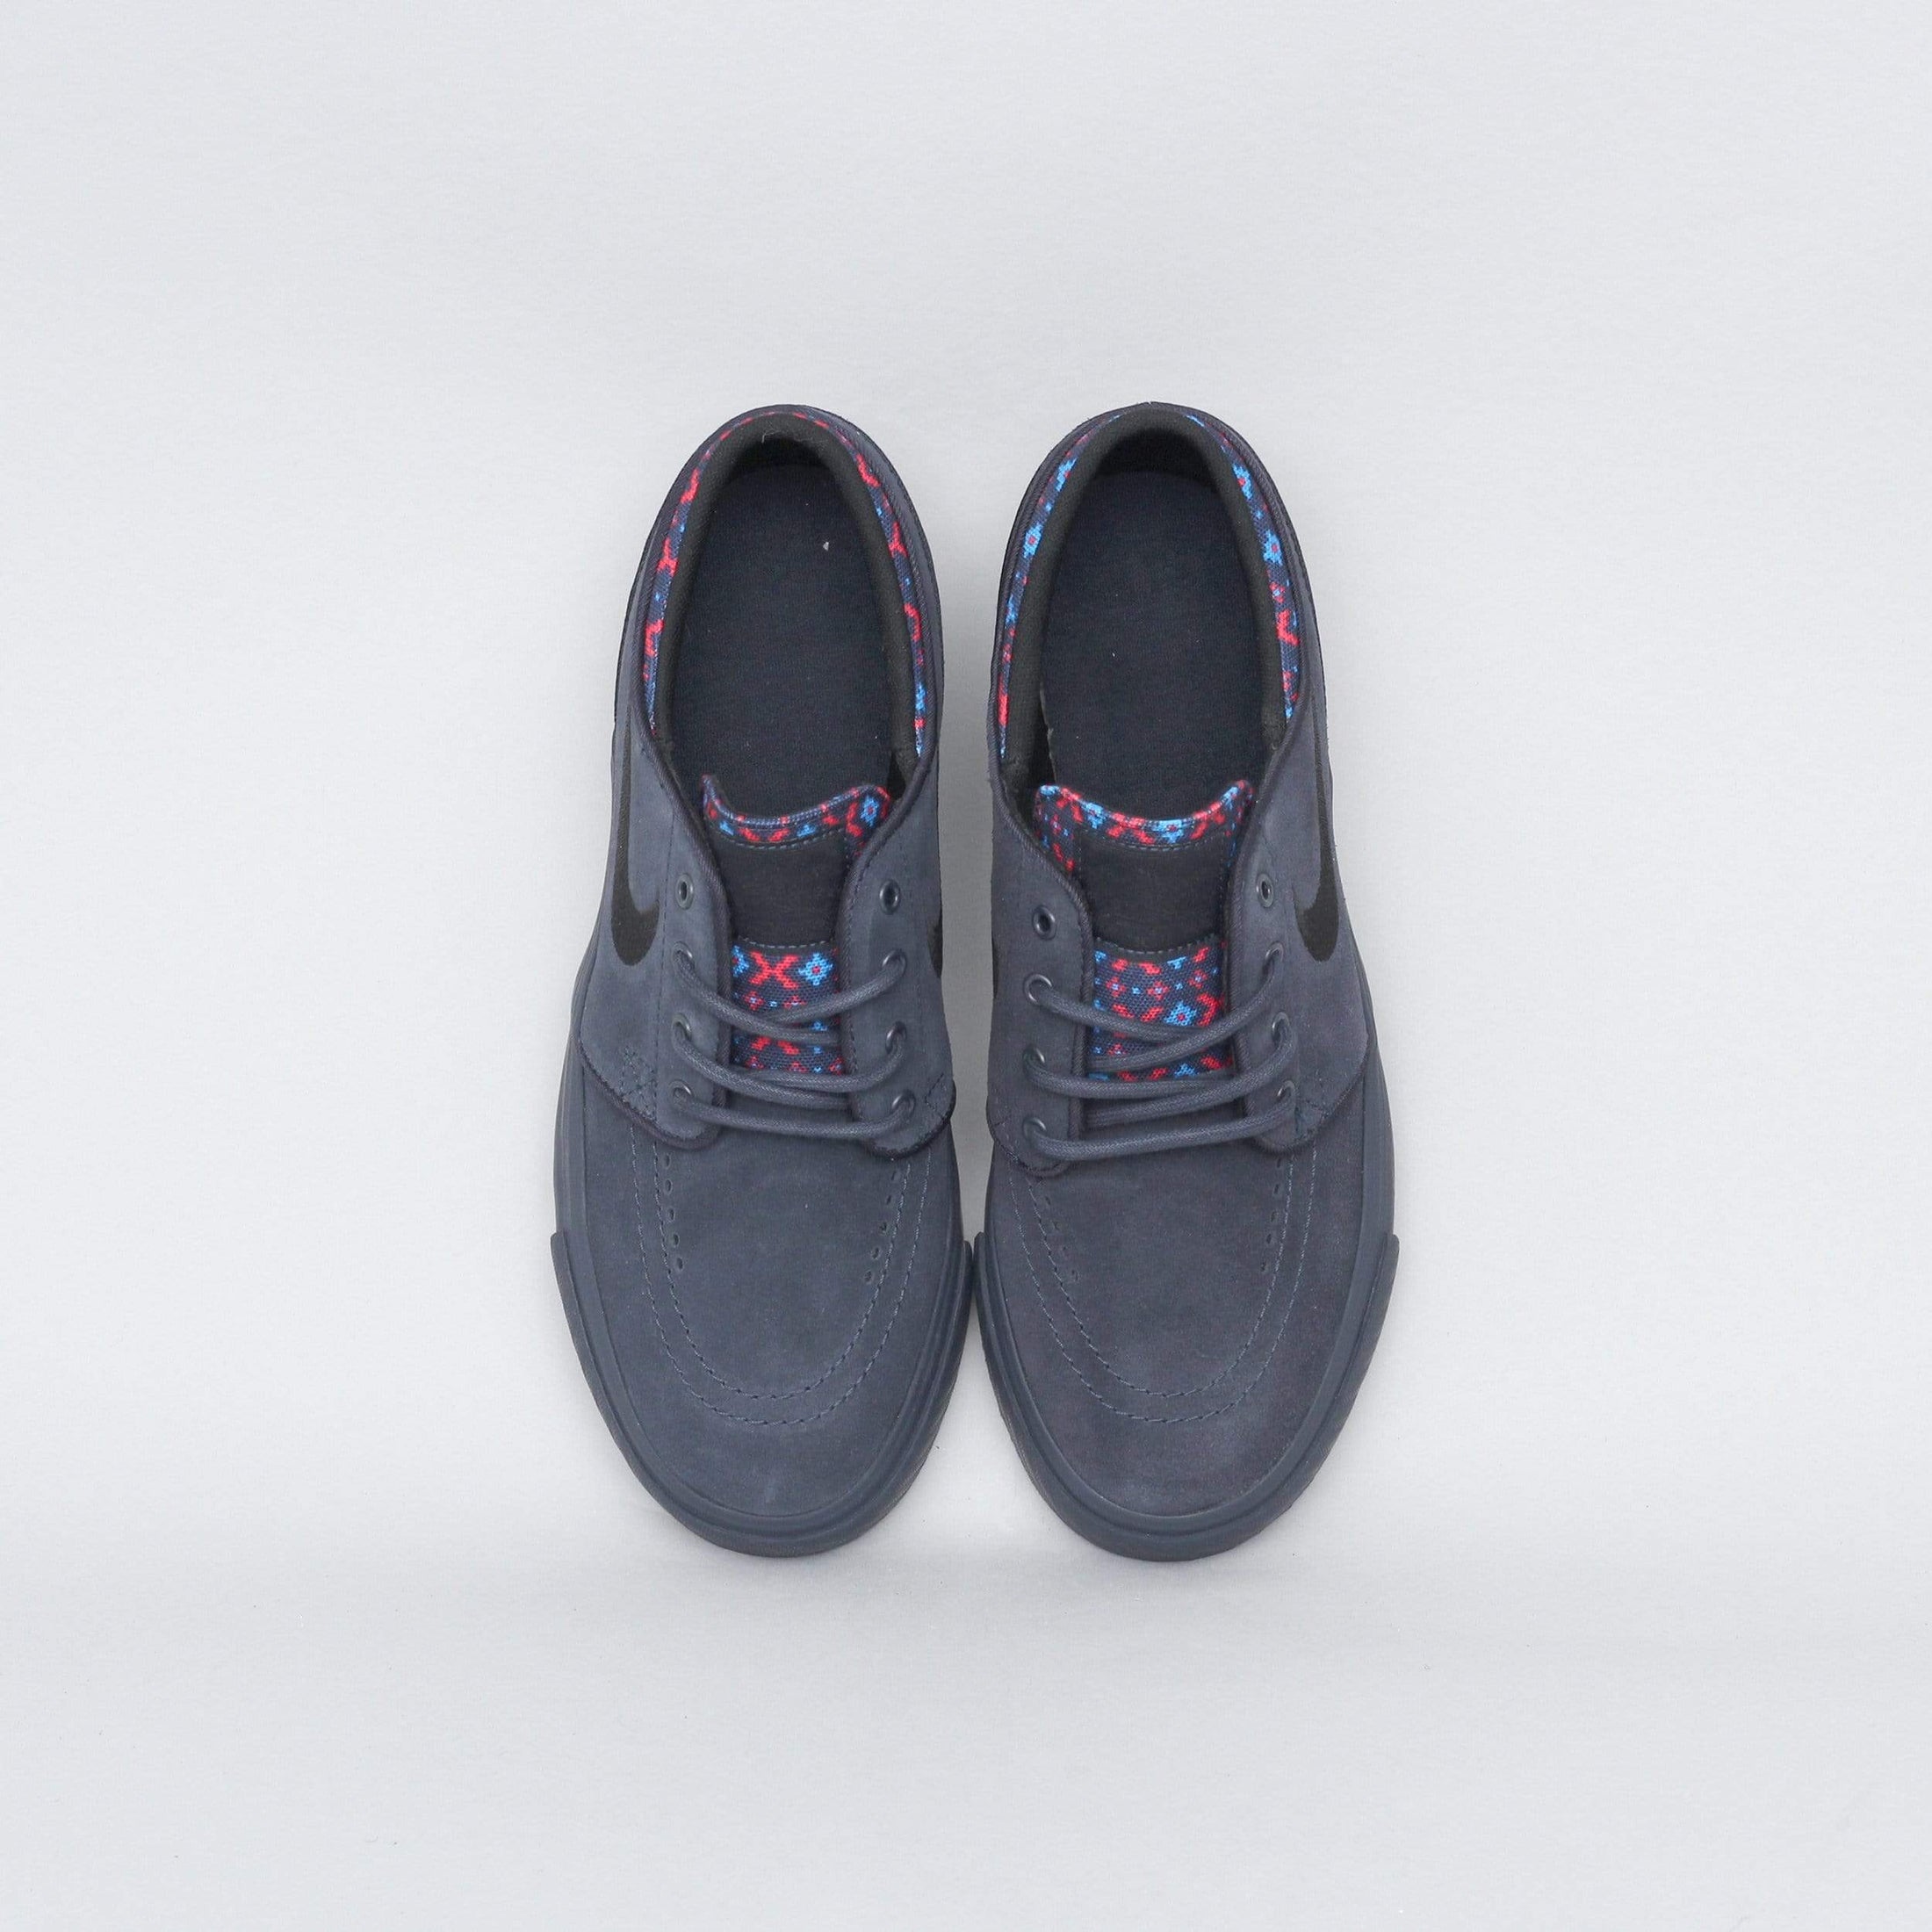 Nike SB Stefan Janoski Suede BG Premium Youth Shoes Dark Obsidian / Black - Dark Obsidian